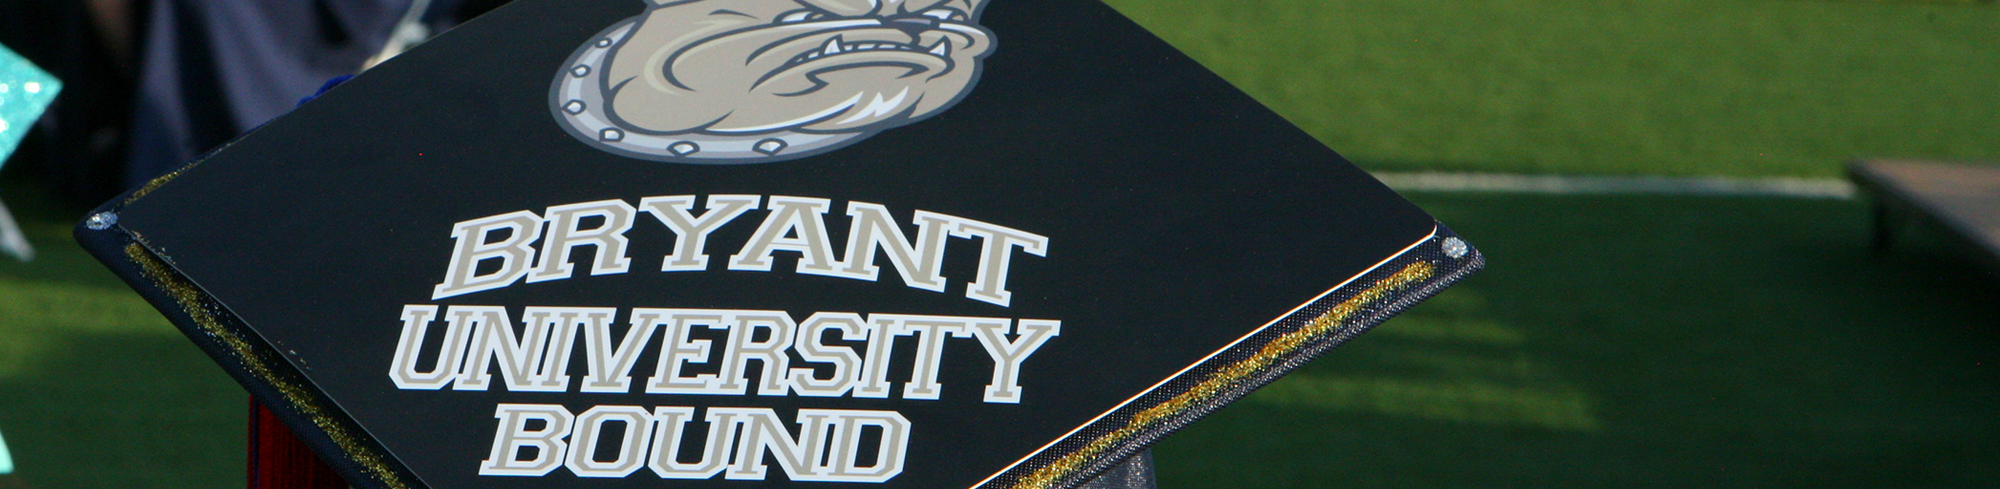 University Bound graduation cap